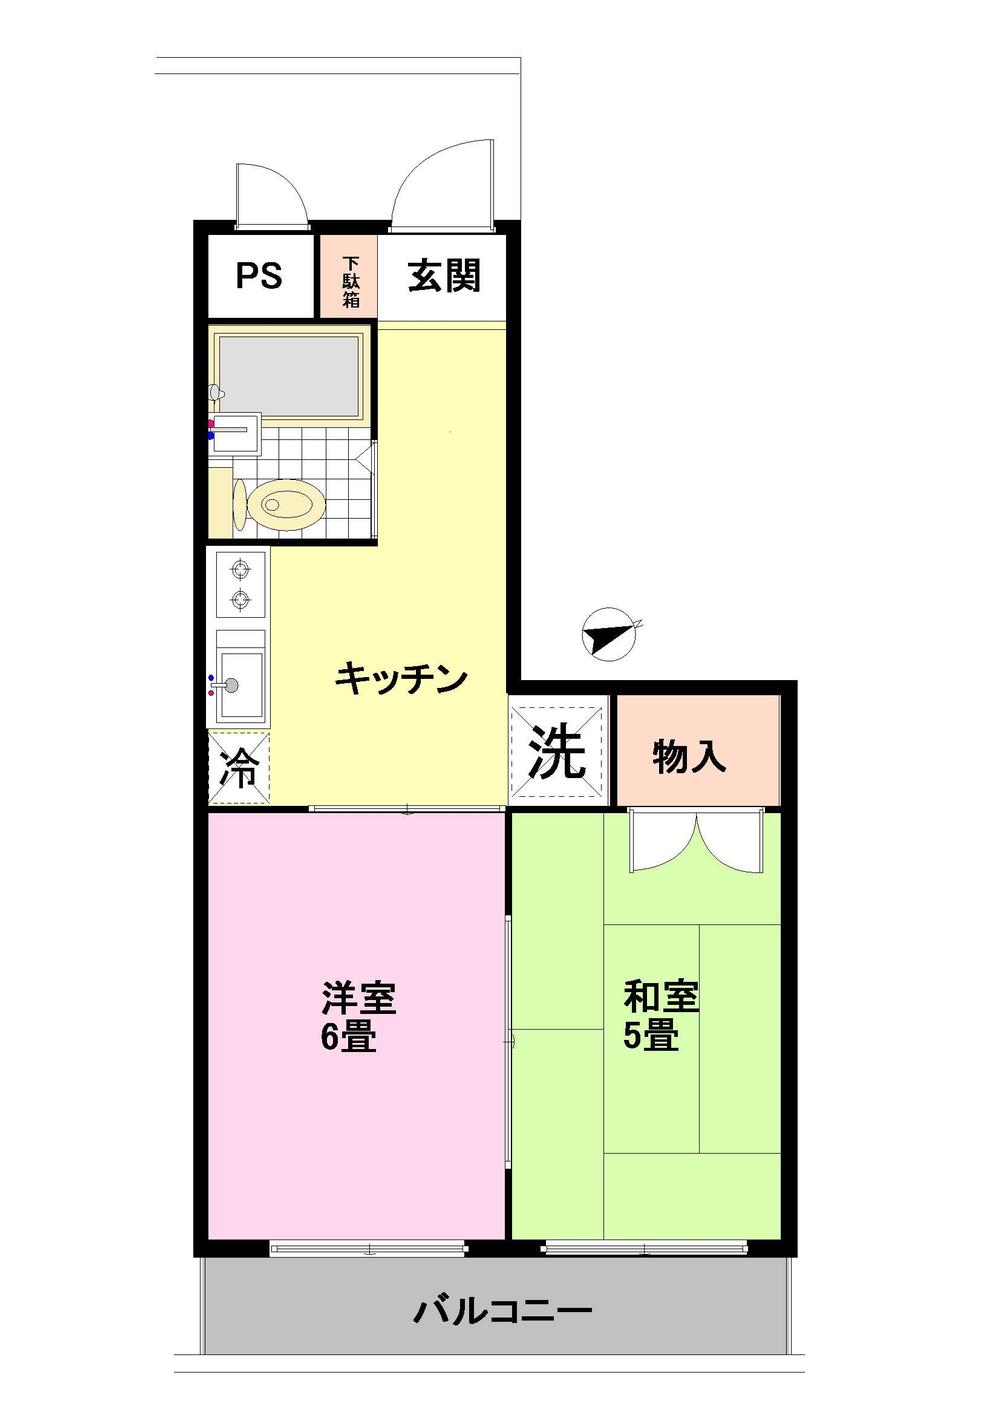 Floor plan. 2K, Price 5.5 million yen, Occupied area 32.24 sq m , Balcony area 5.04 sq m